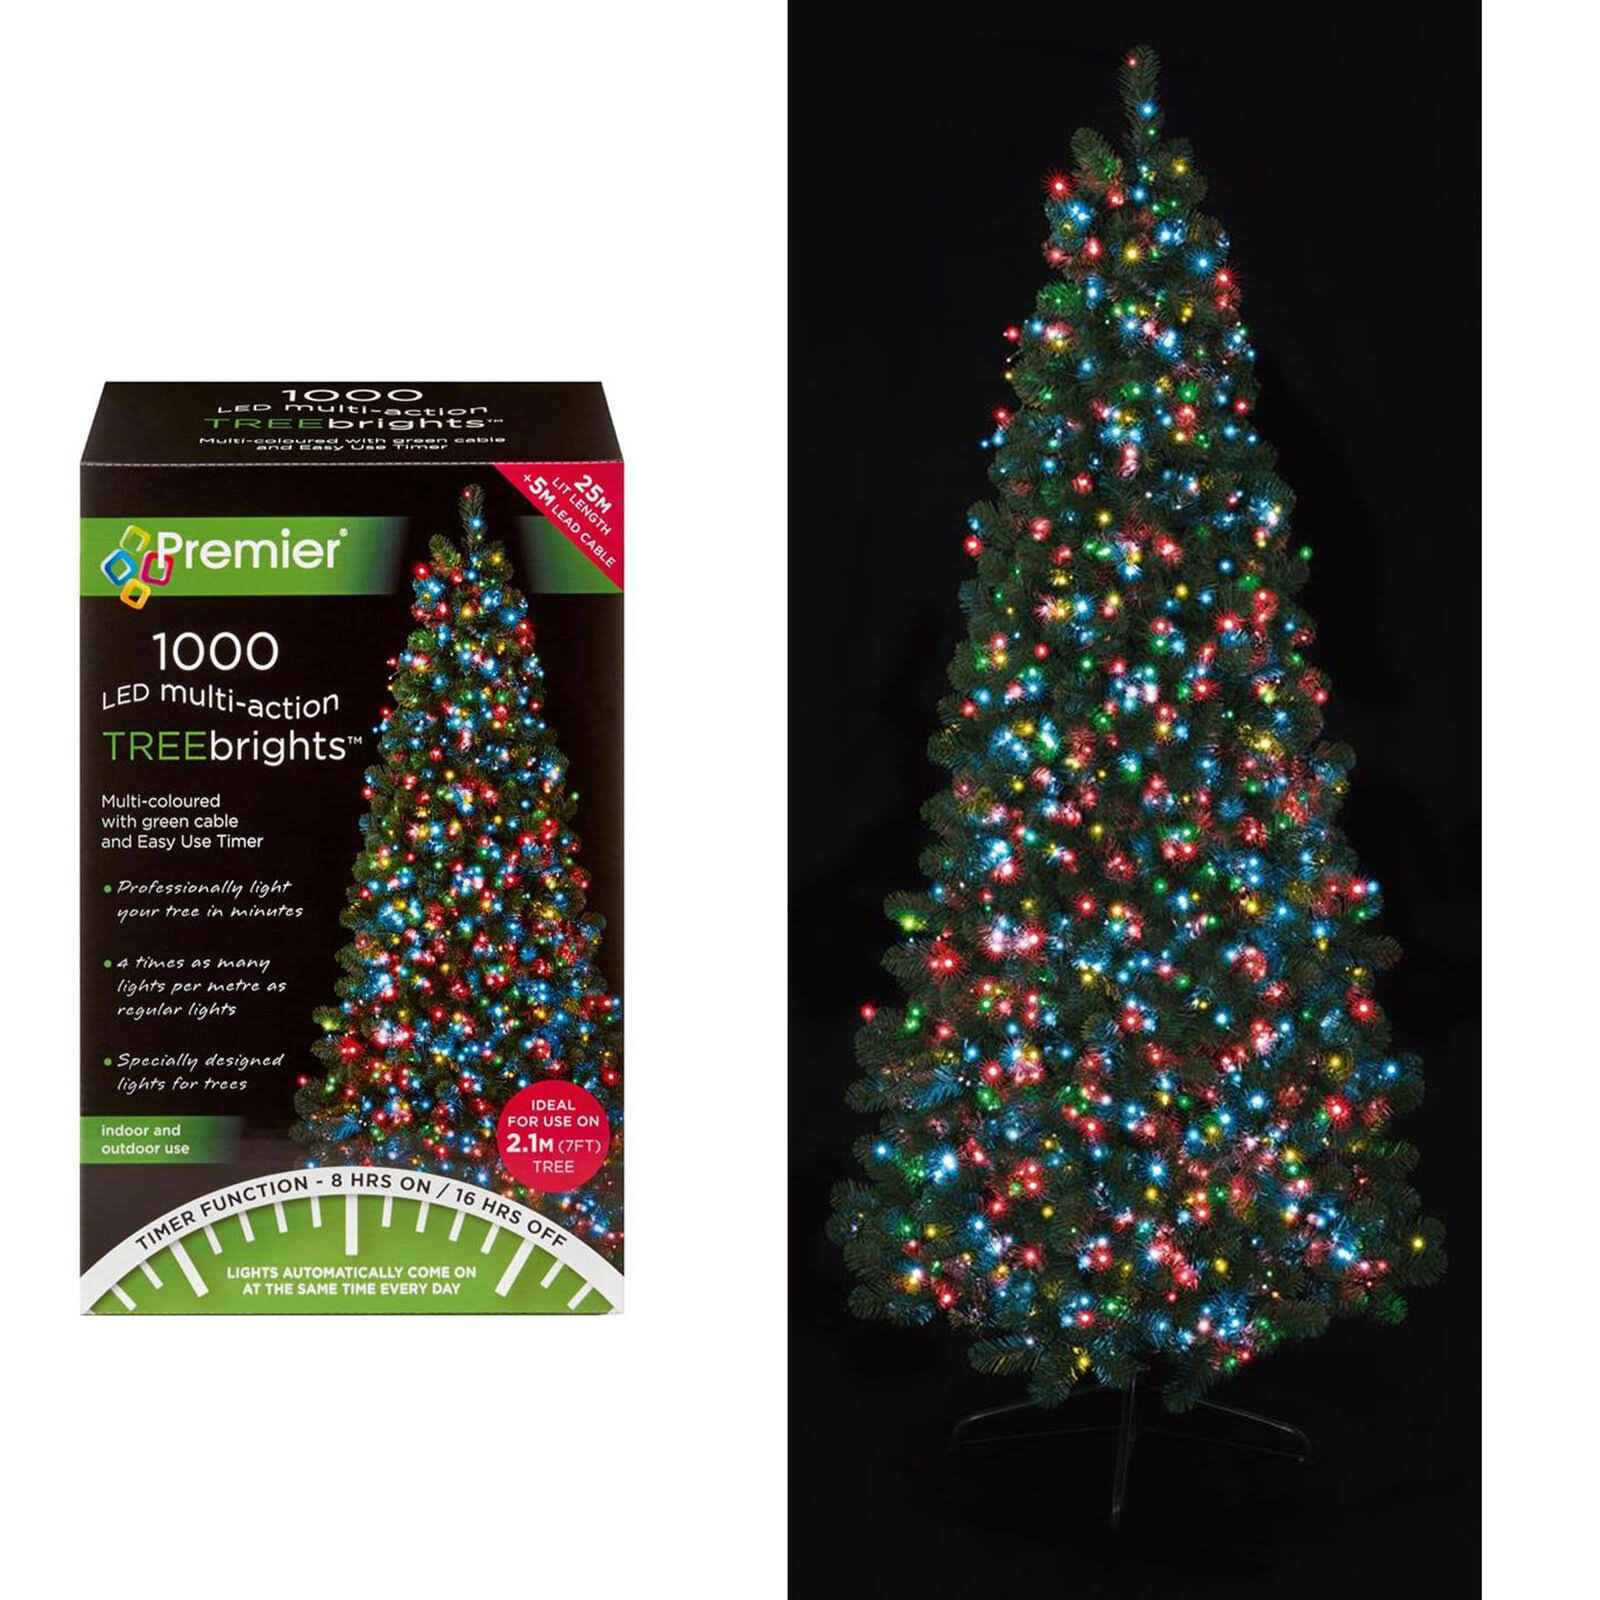 Premier LED Christmas TREE Brights Timer Lights - Multi Action, 1000pcs